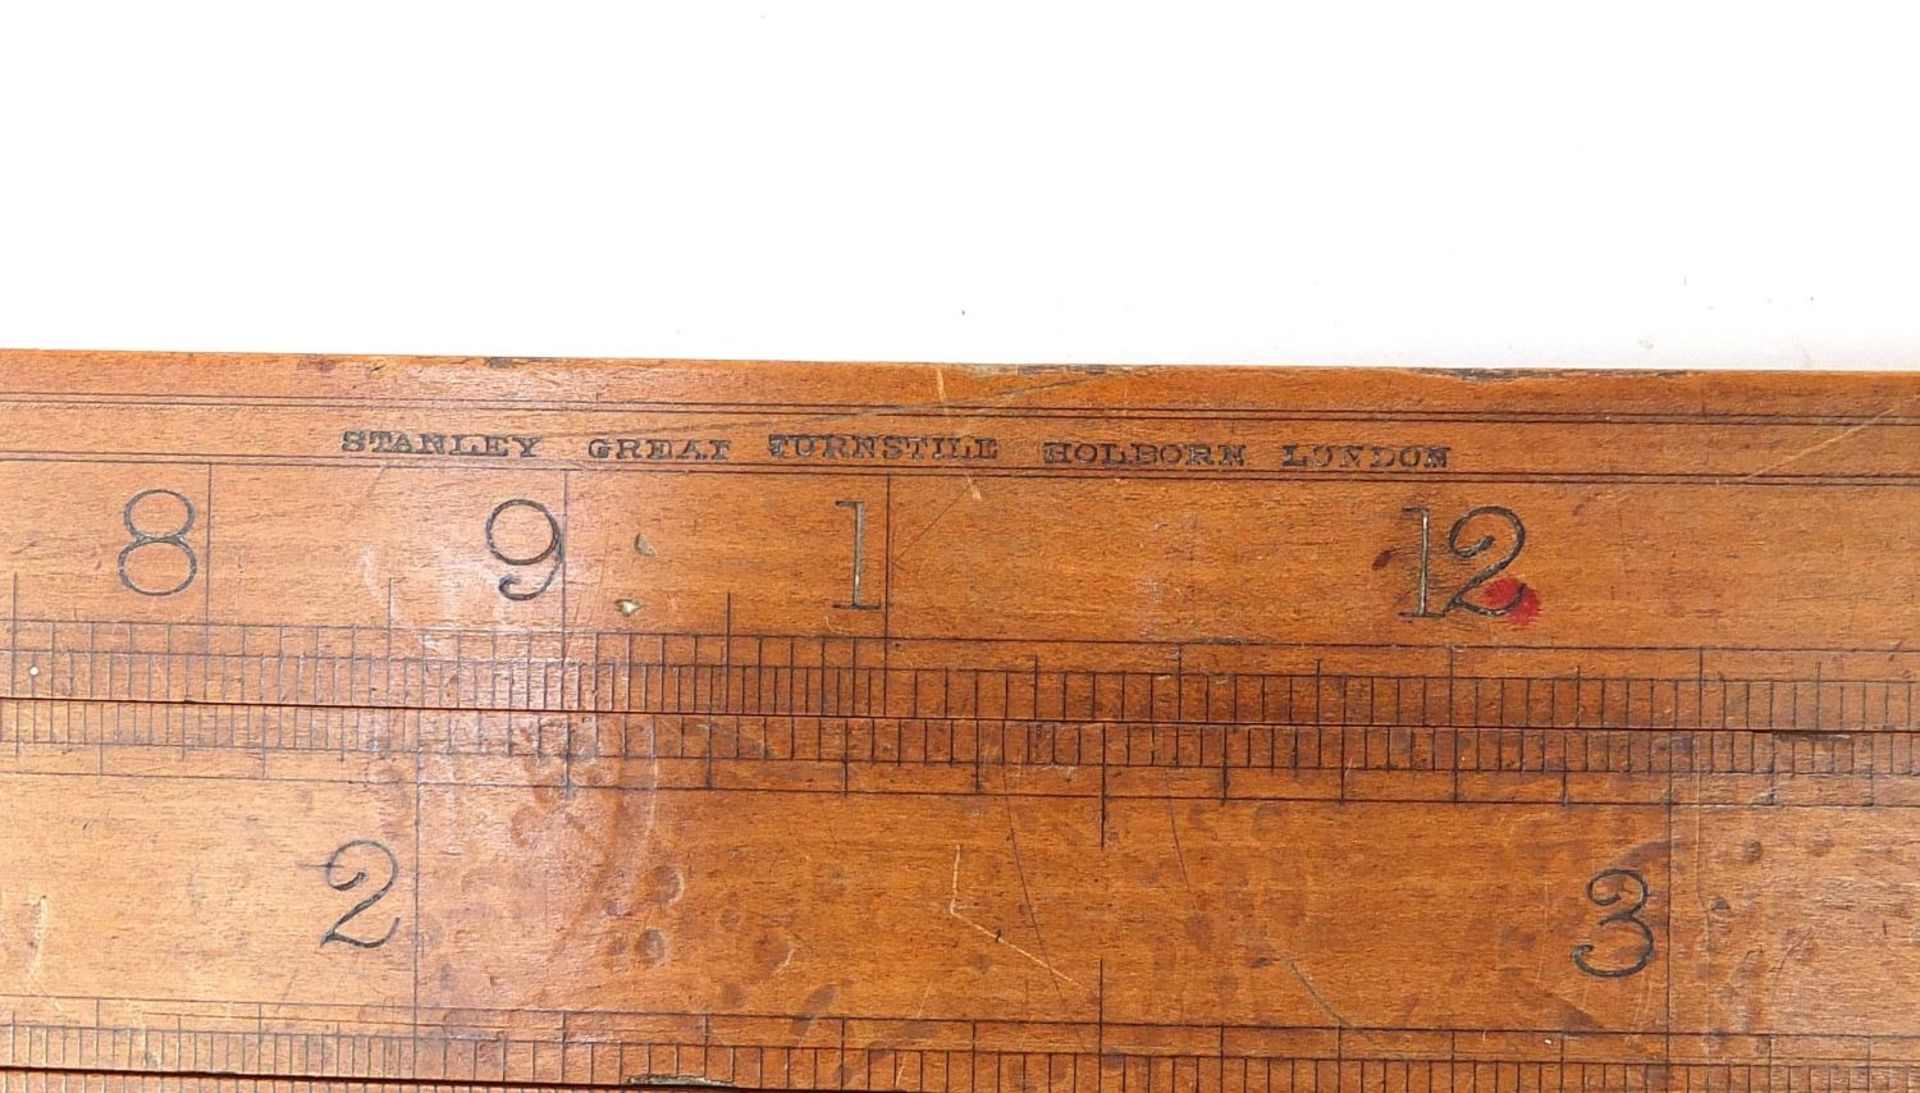 Antique Stanley boxwood three foot sliding rule impressed Stanley Great Turnstile Holborn London, - Image 12 of 14